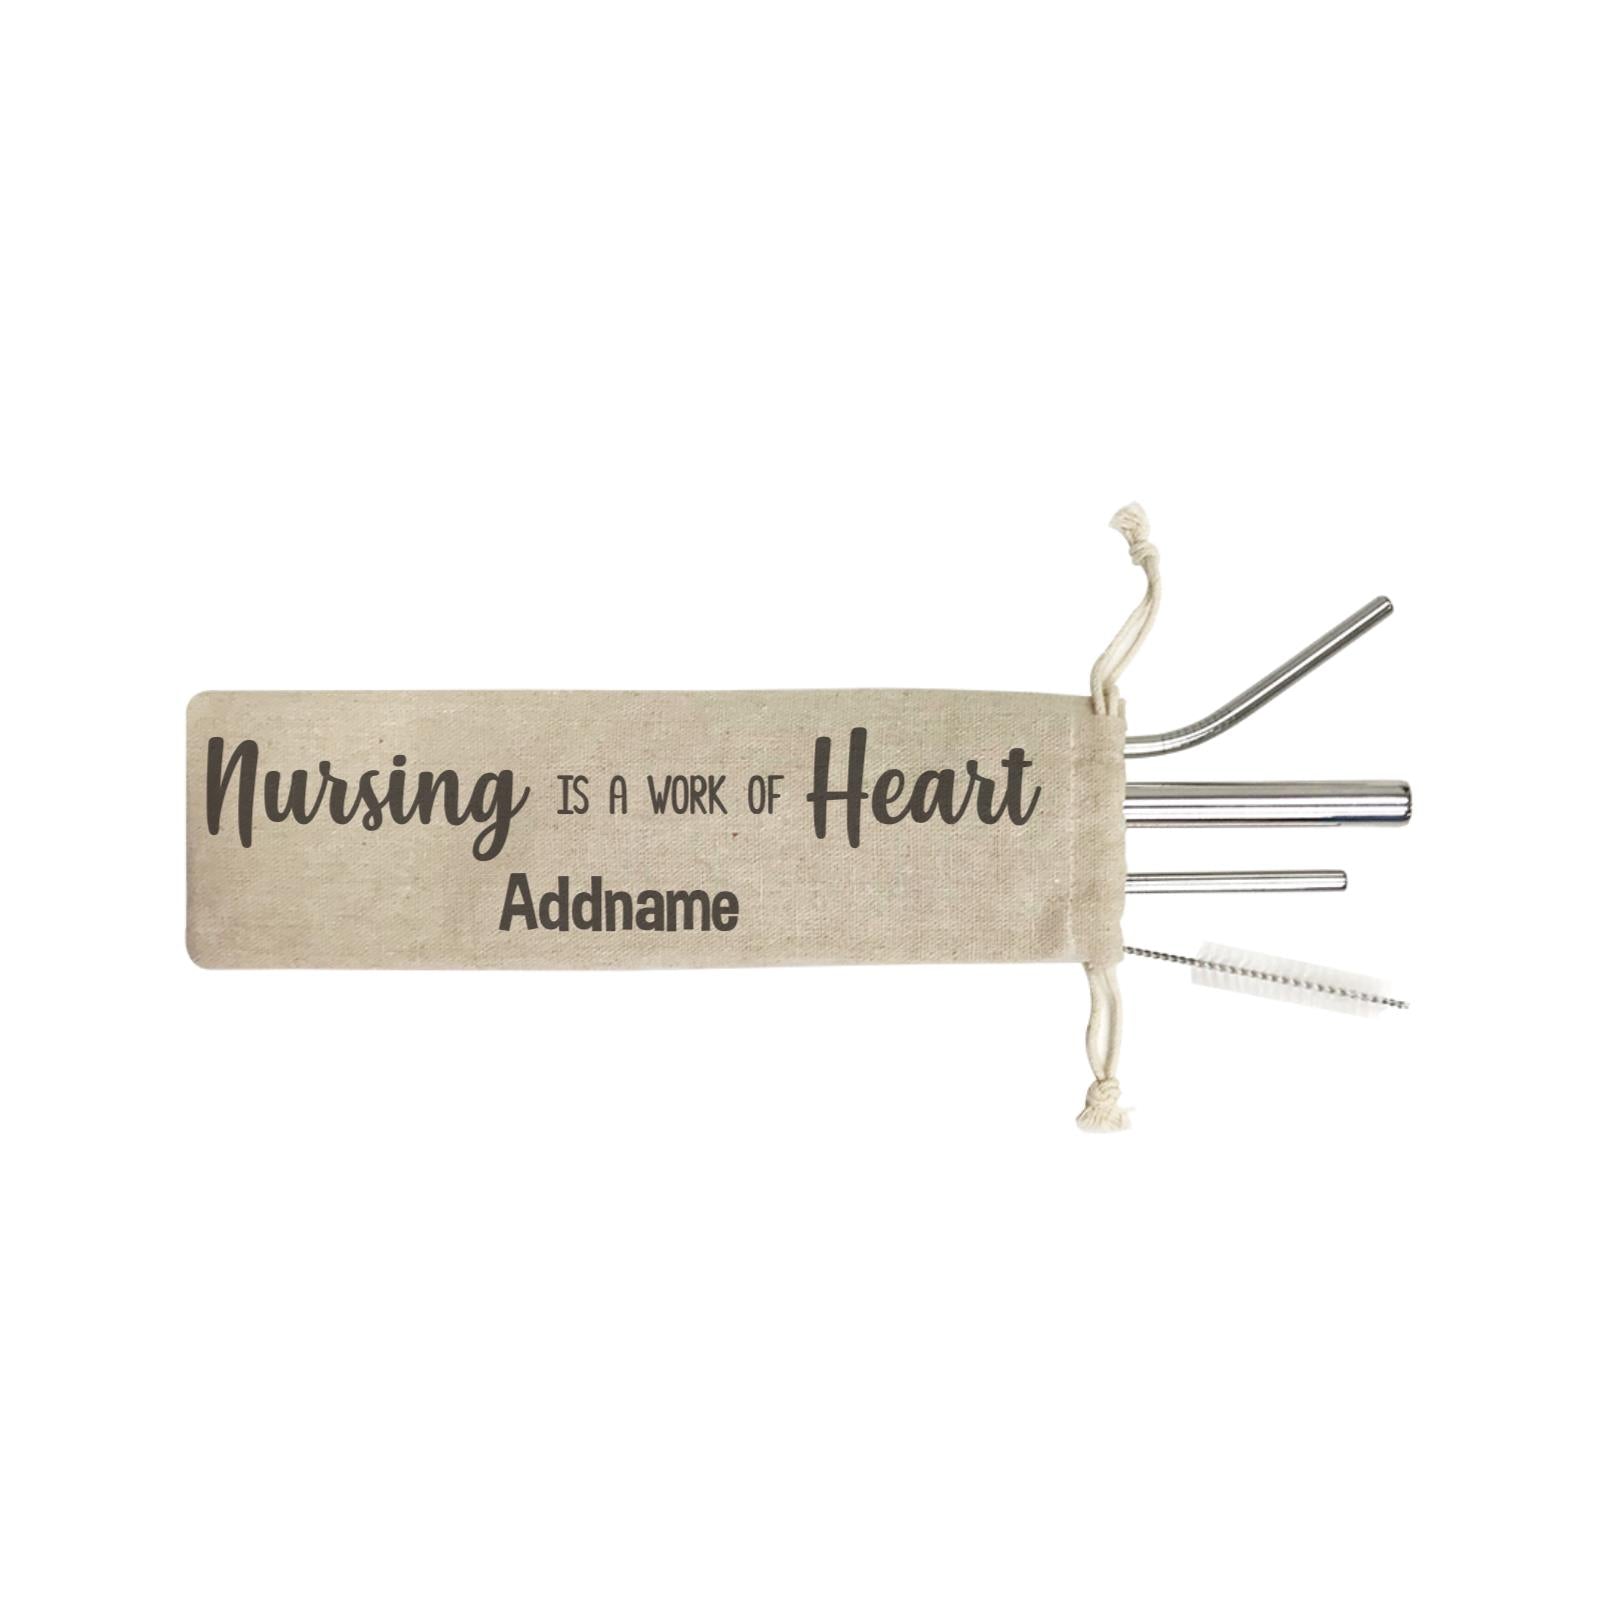 Nursing Is A Work of Heart SB 4-in-1 Stainless Steel Straw Set In a Satchel